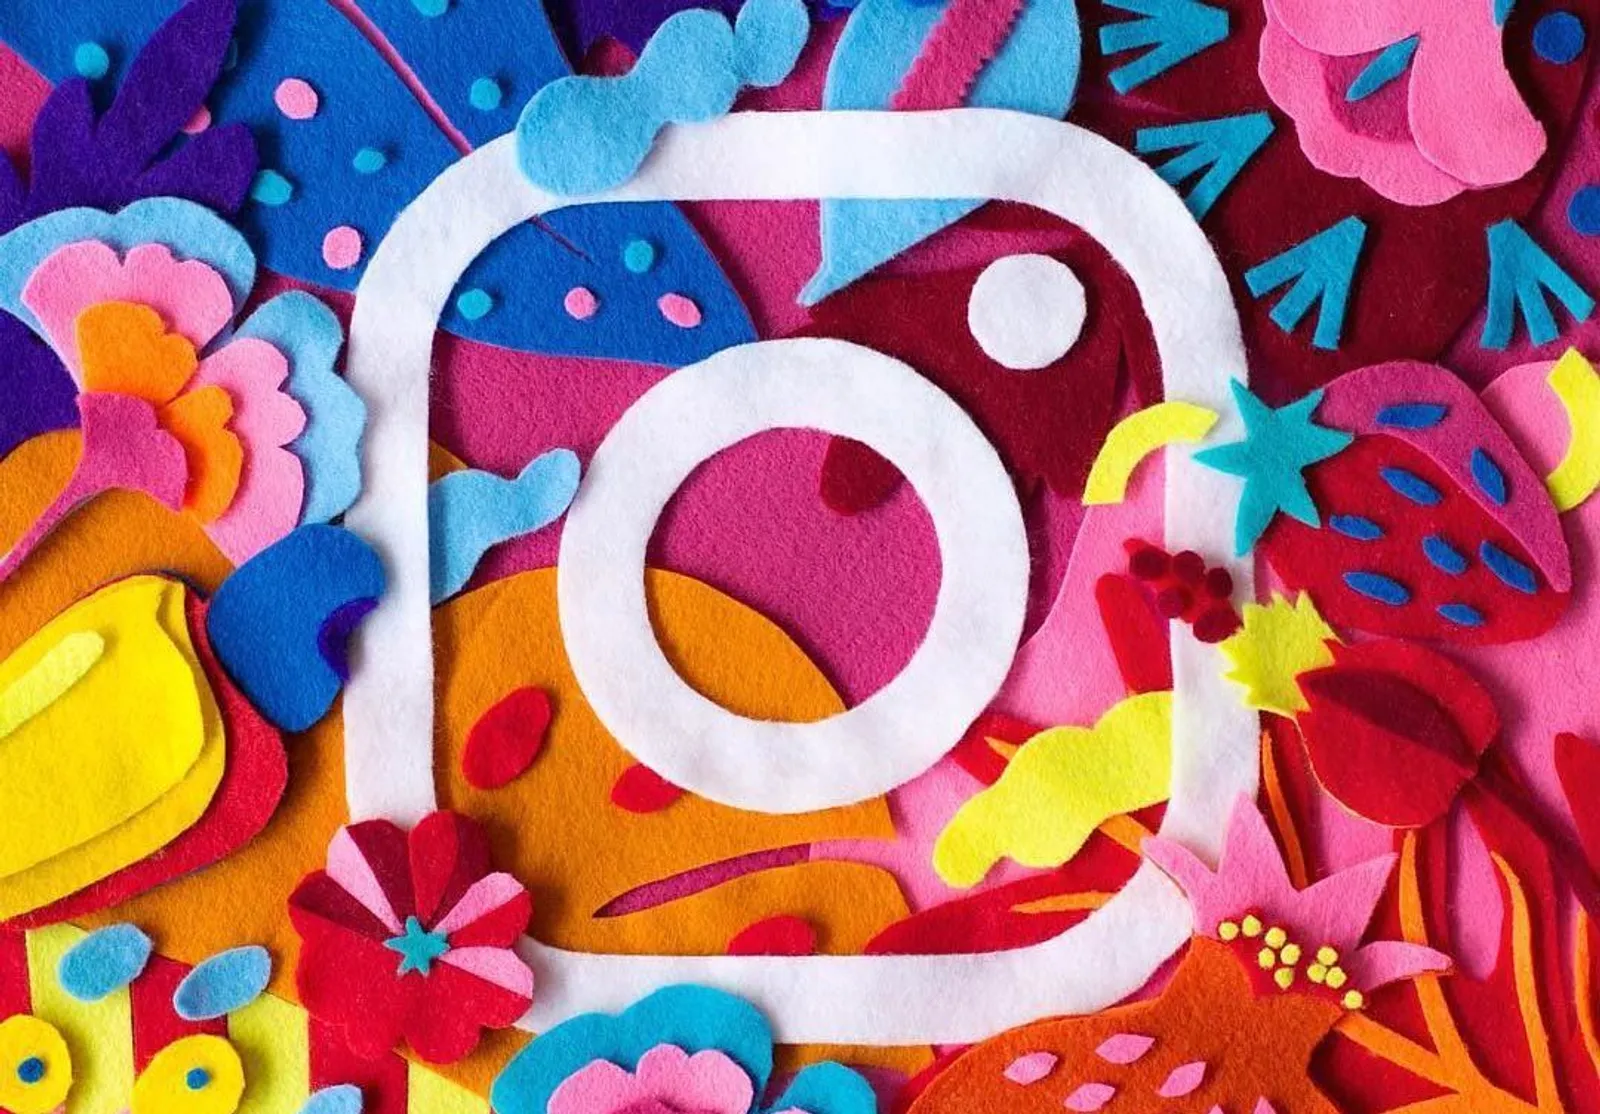 Instagram Ikut Rayakan Ramadan dan Idul Fitri dengan Cara Kreatif  